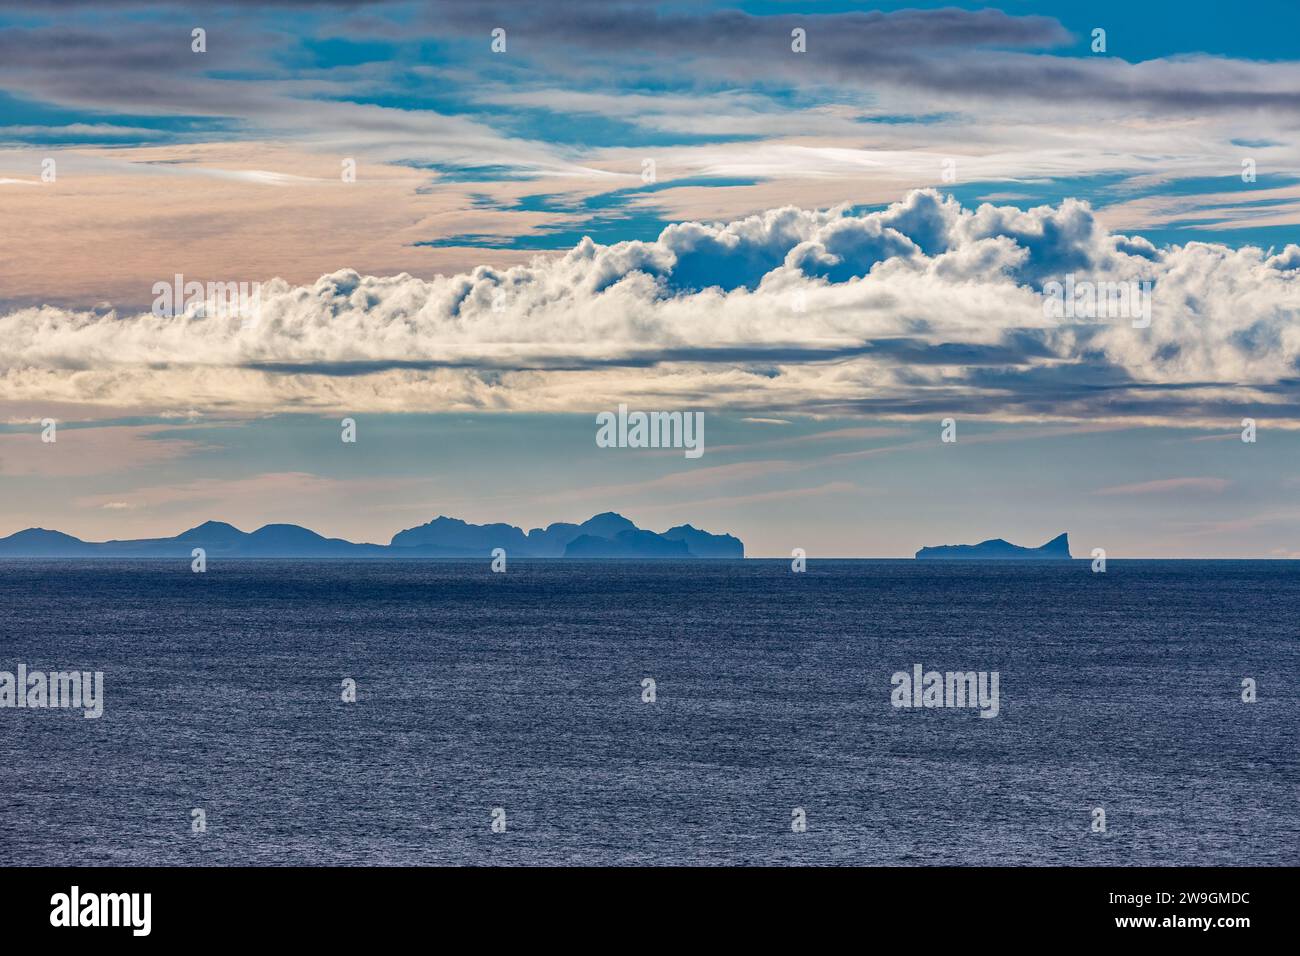 Nel tardo pomeriggio, vista sull'Oceano Atlantico vicino a Vik, nell'Islanda meridionale Foto Stock